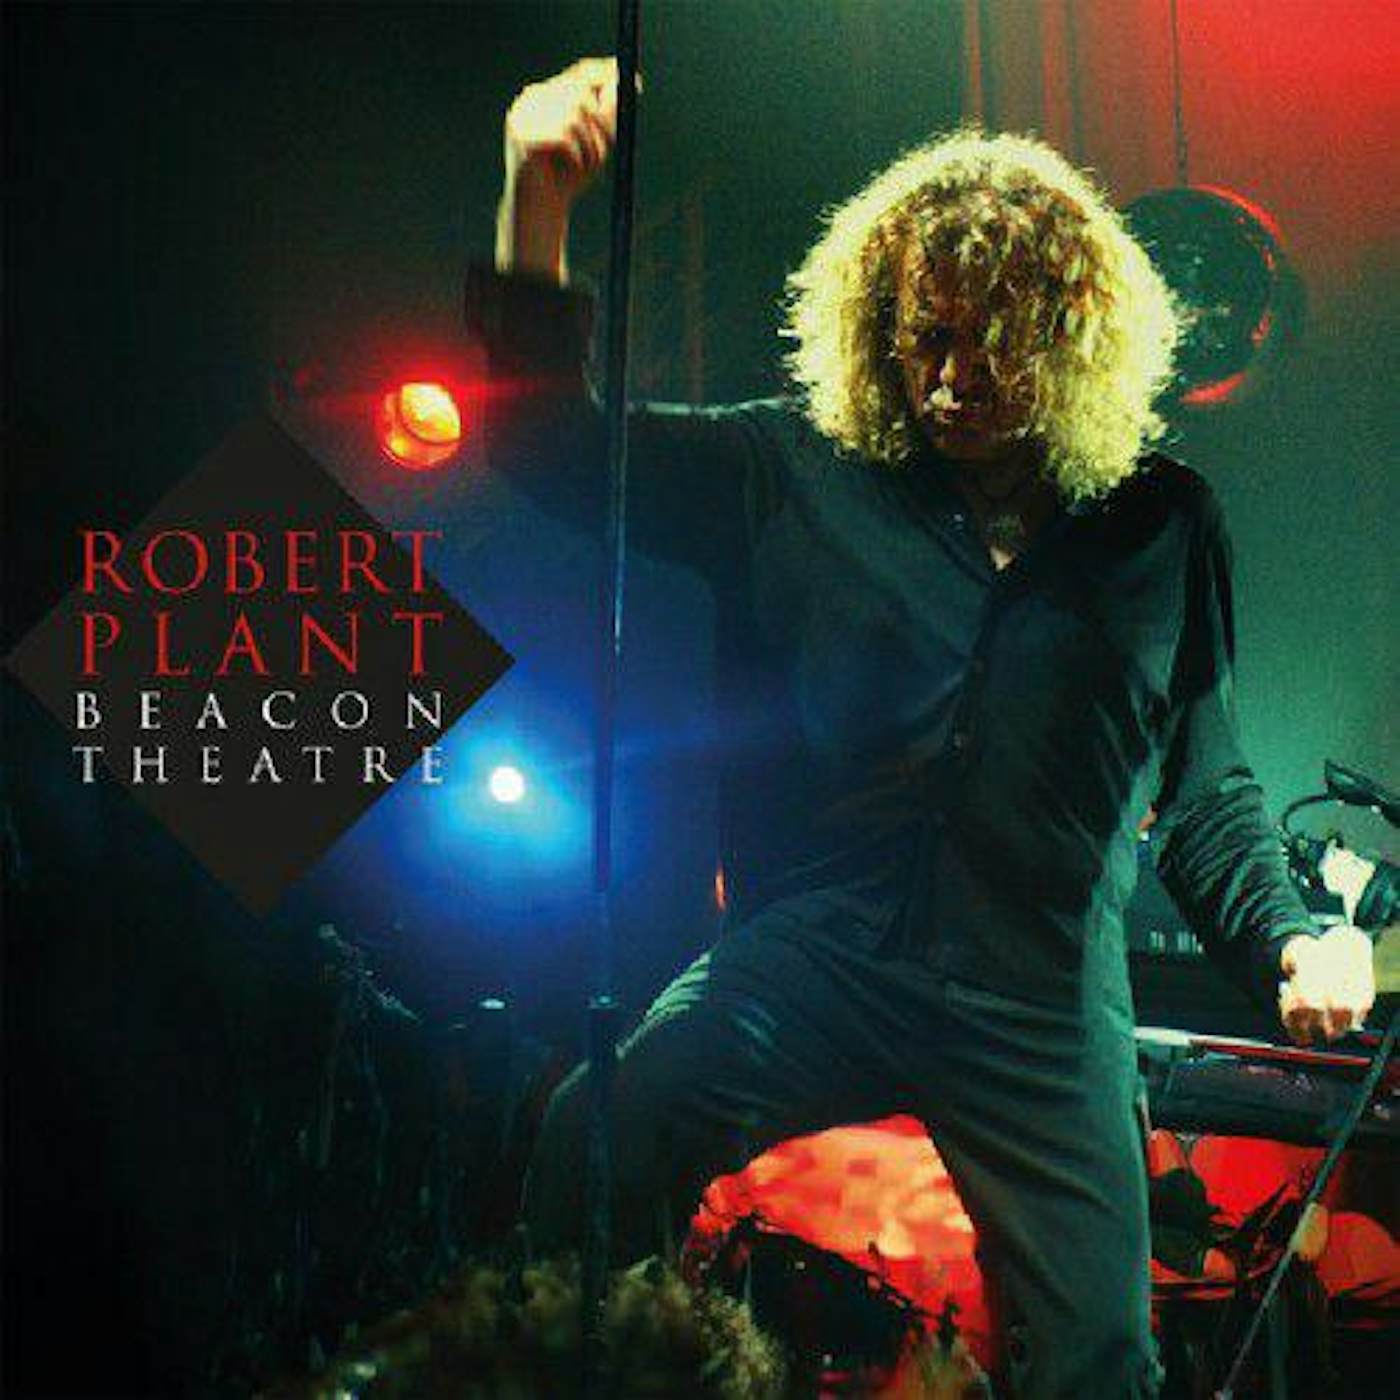 Robert Plant Beacon Theatre (Clear Vinyl Record/2lp)